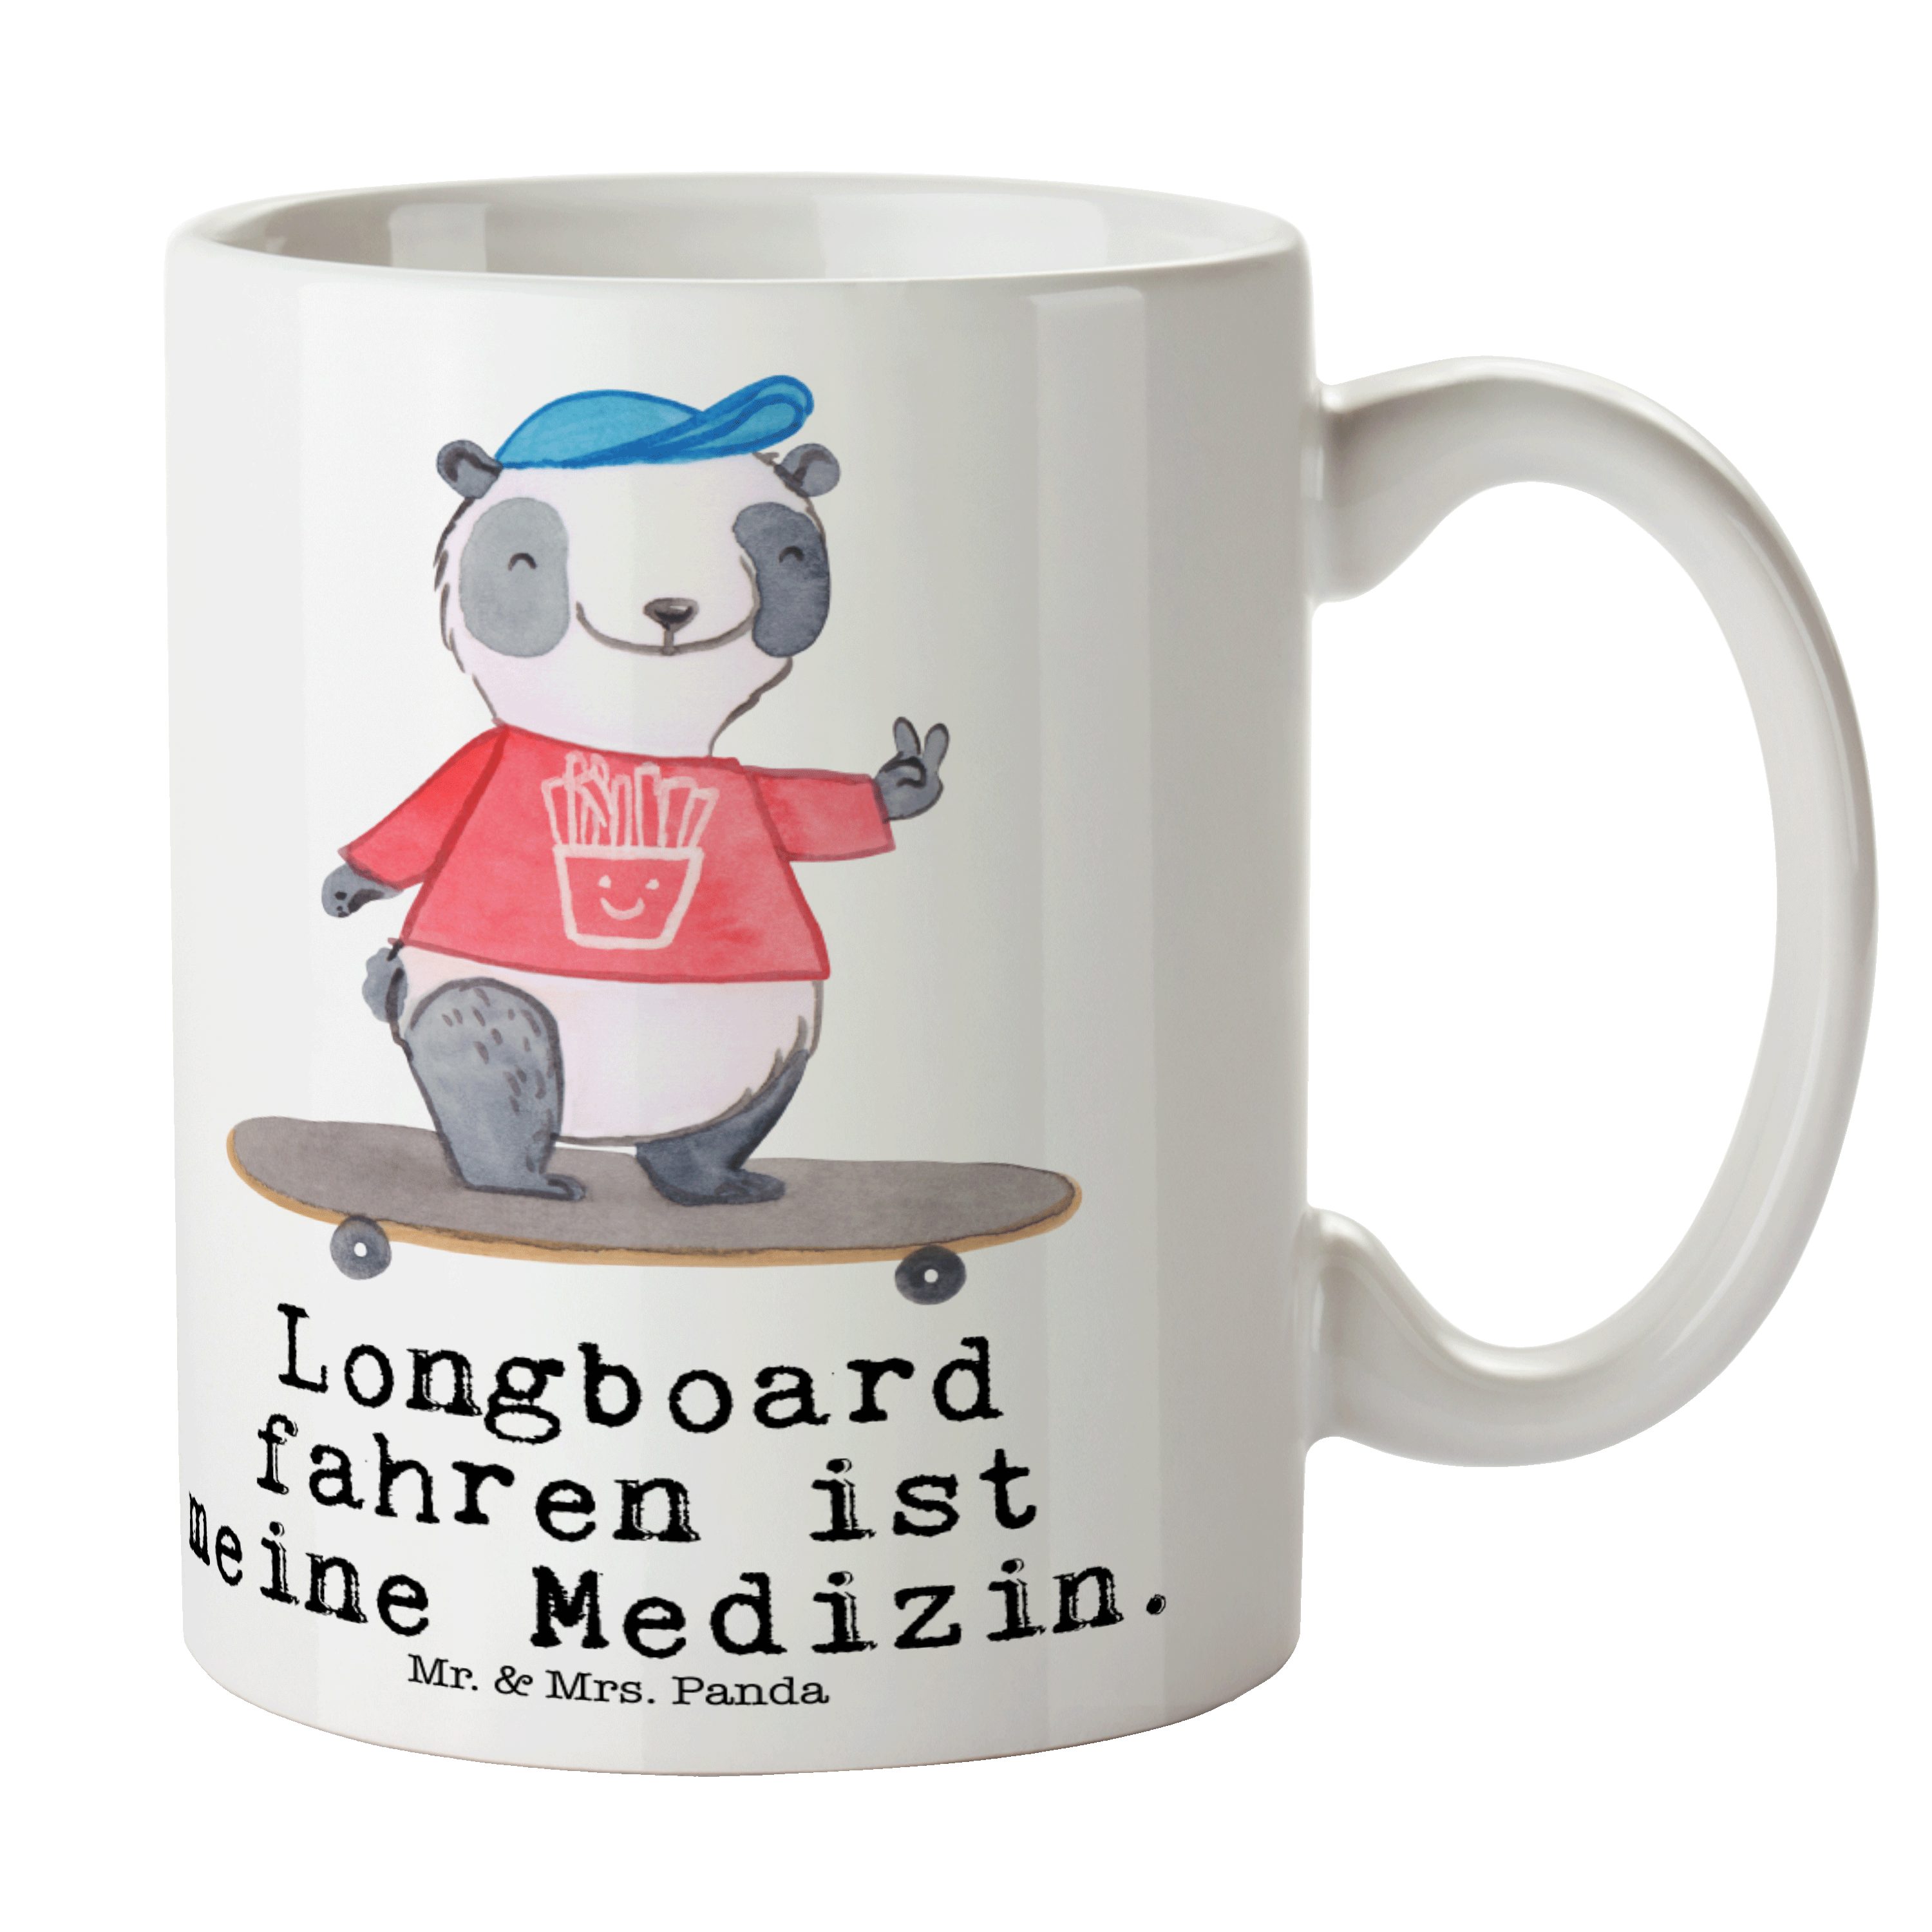 Mr. & Mrs. Panda Tasse Panda Longboard fahren Medizin - Weiß - Geschenk, Auszeichnung, Tasse, Keramik